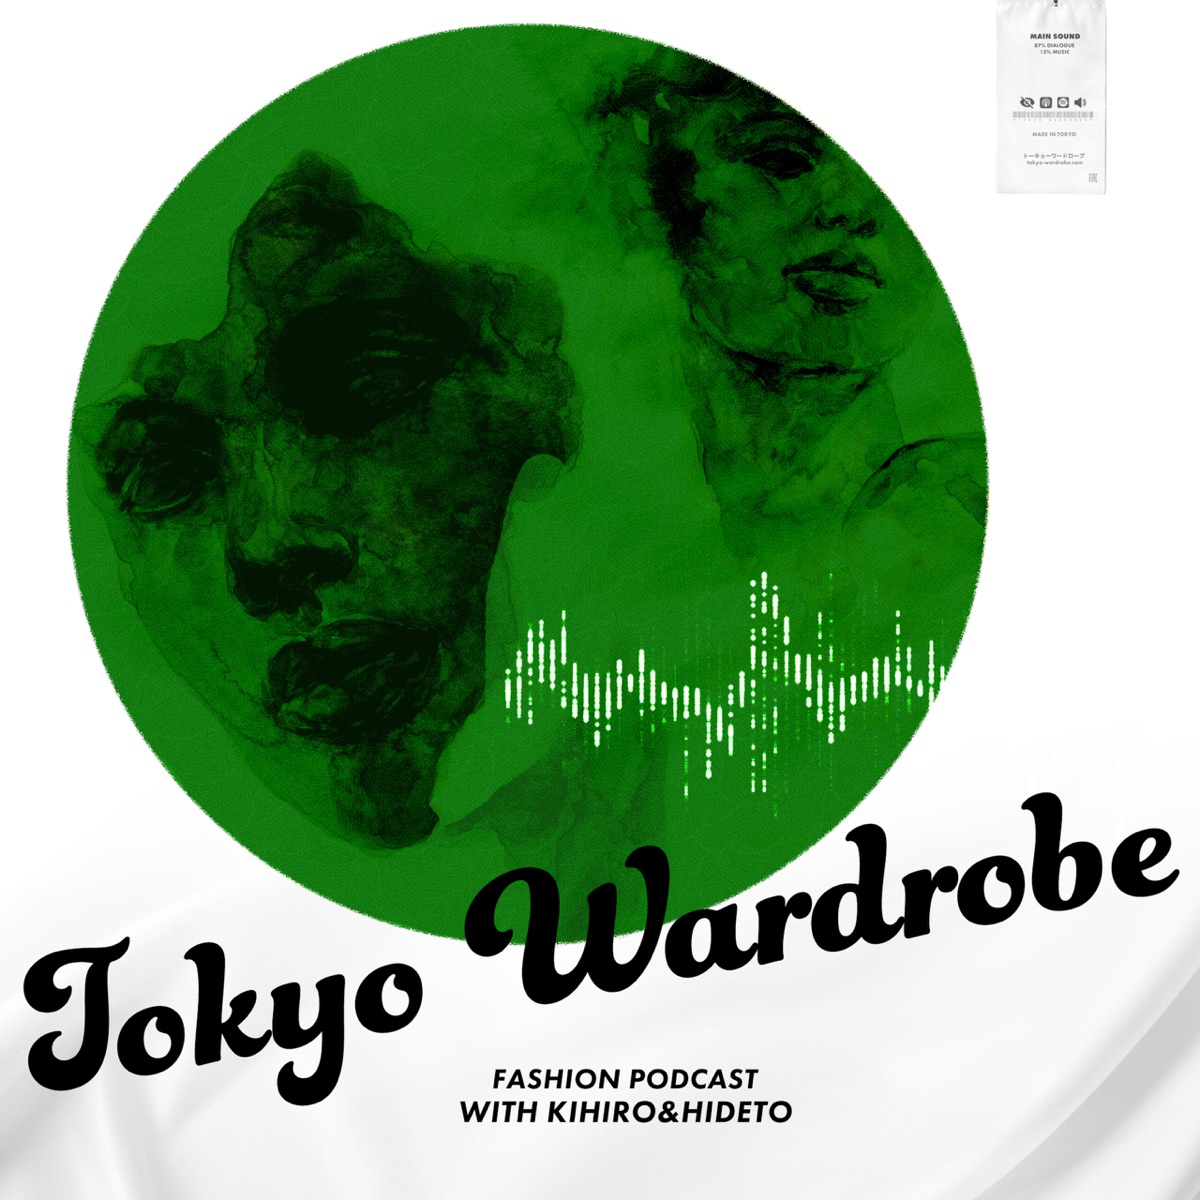 TOKYO WARDROBE ファッショントーク – Podcast – Podtail